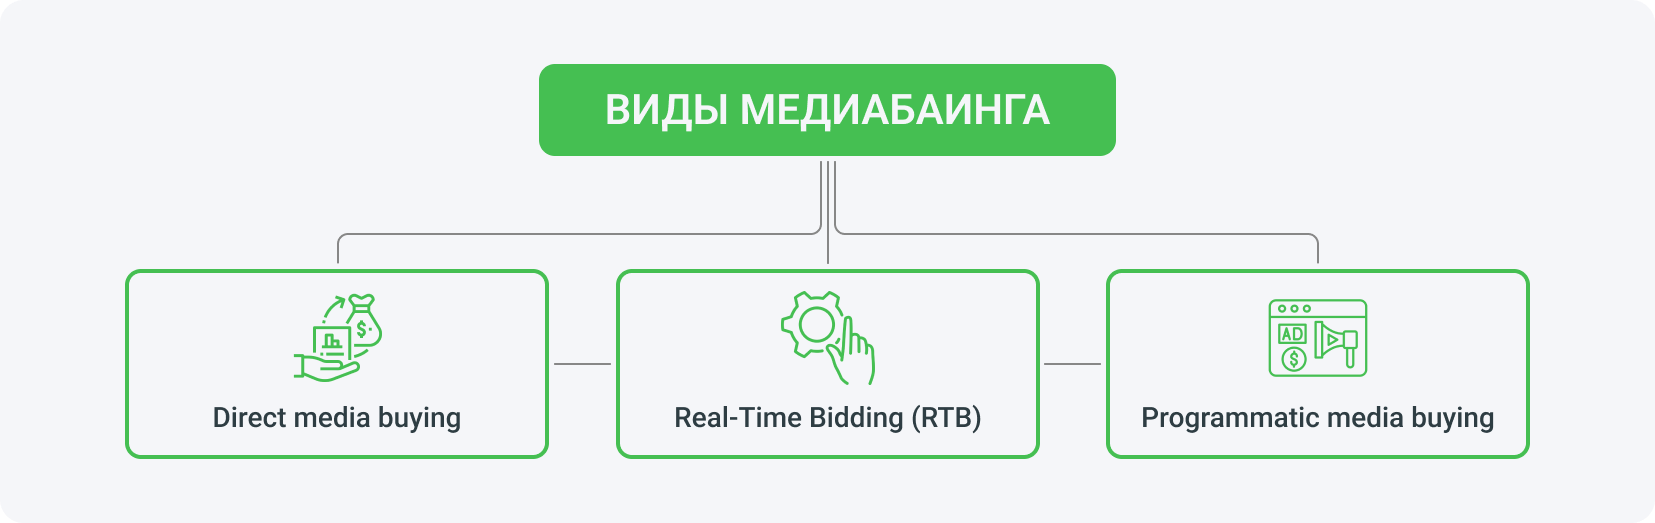 Медиабаинг можно разделить на direct, real-time bidding и programmatic.